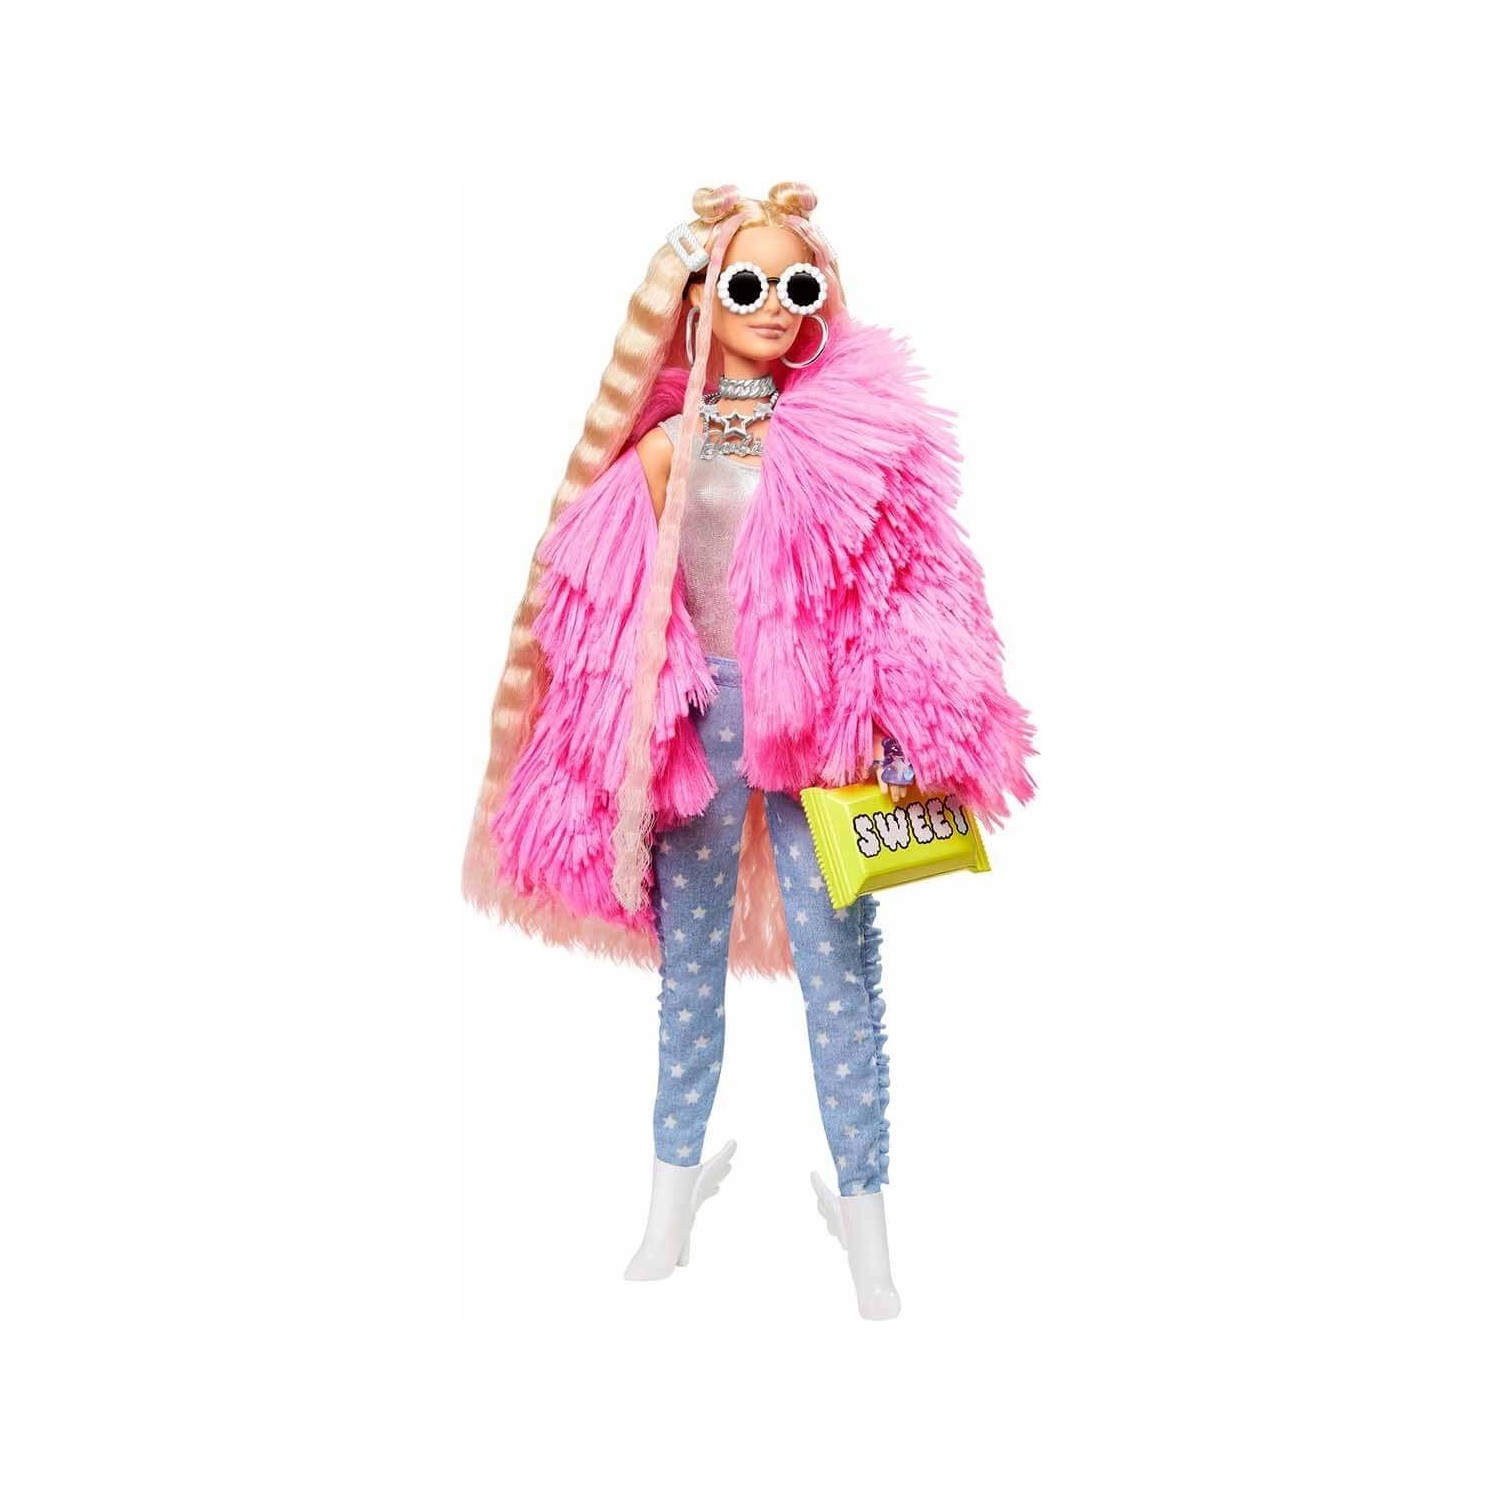 Кукла Barbie в дополнительной куртке GRN27 кукла barbie в дополнительной куртке grn27